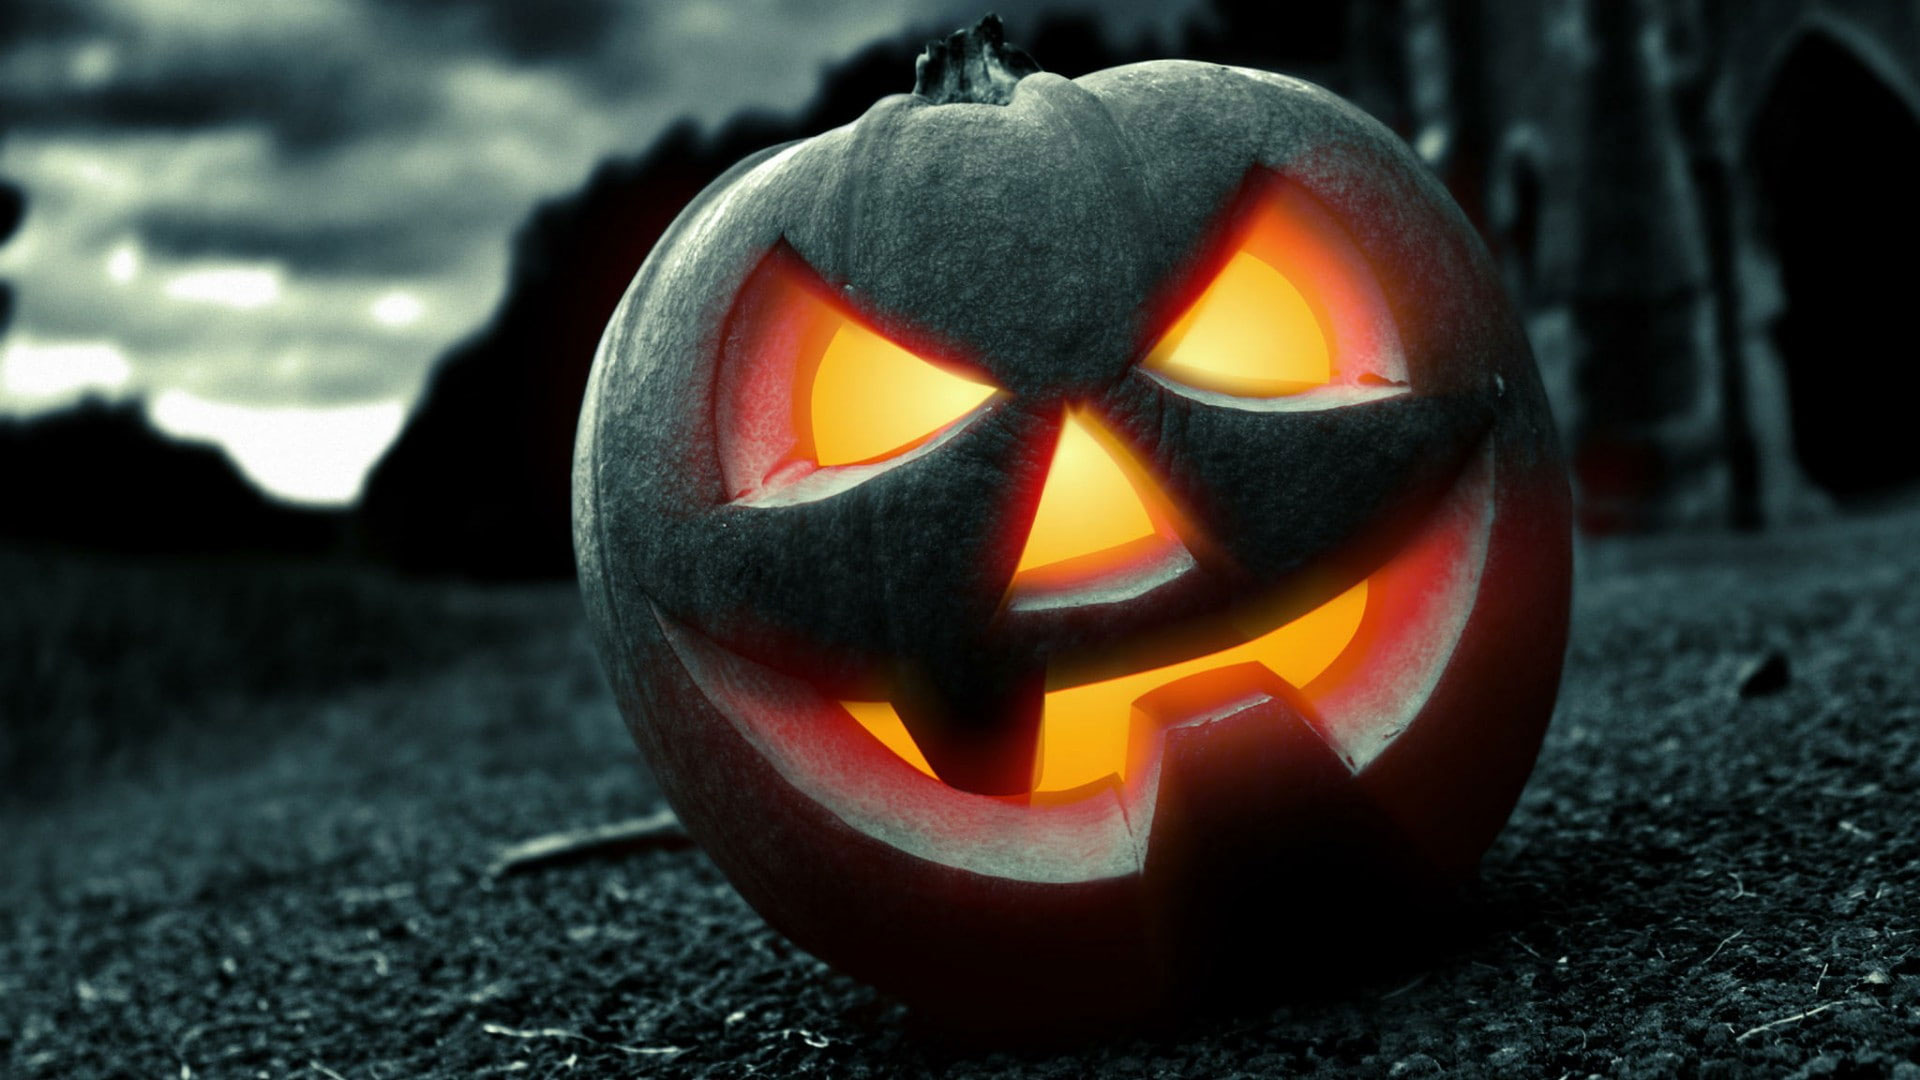 Wallpaper Halloween, Pumpkin, Jack O Lantern, Monochrome